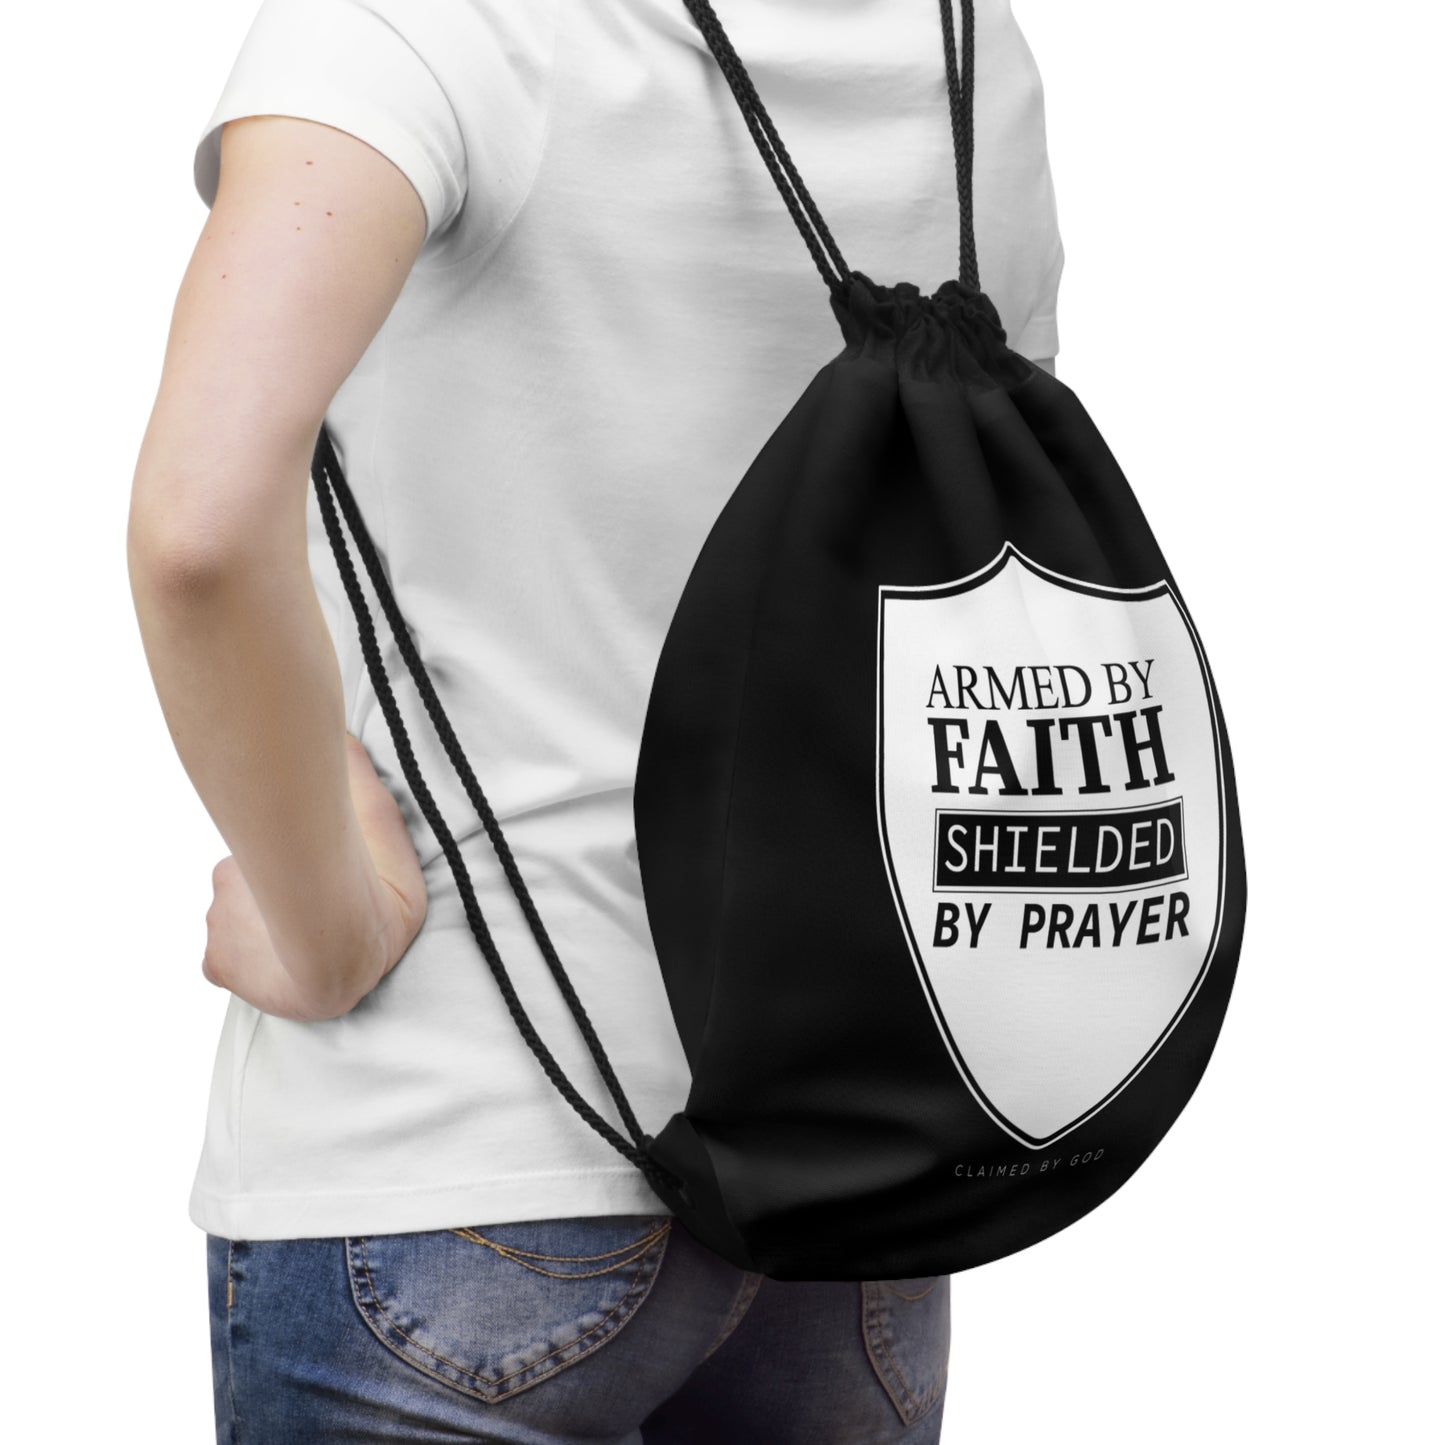 Armed By Faith Shielded By Prayer Drawstring Bag